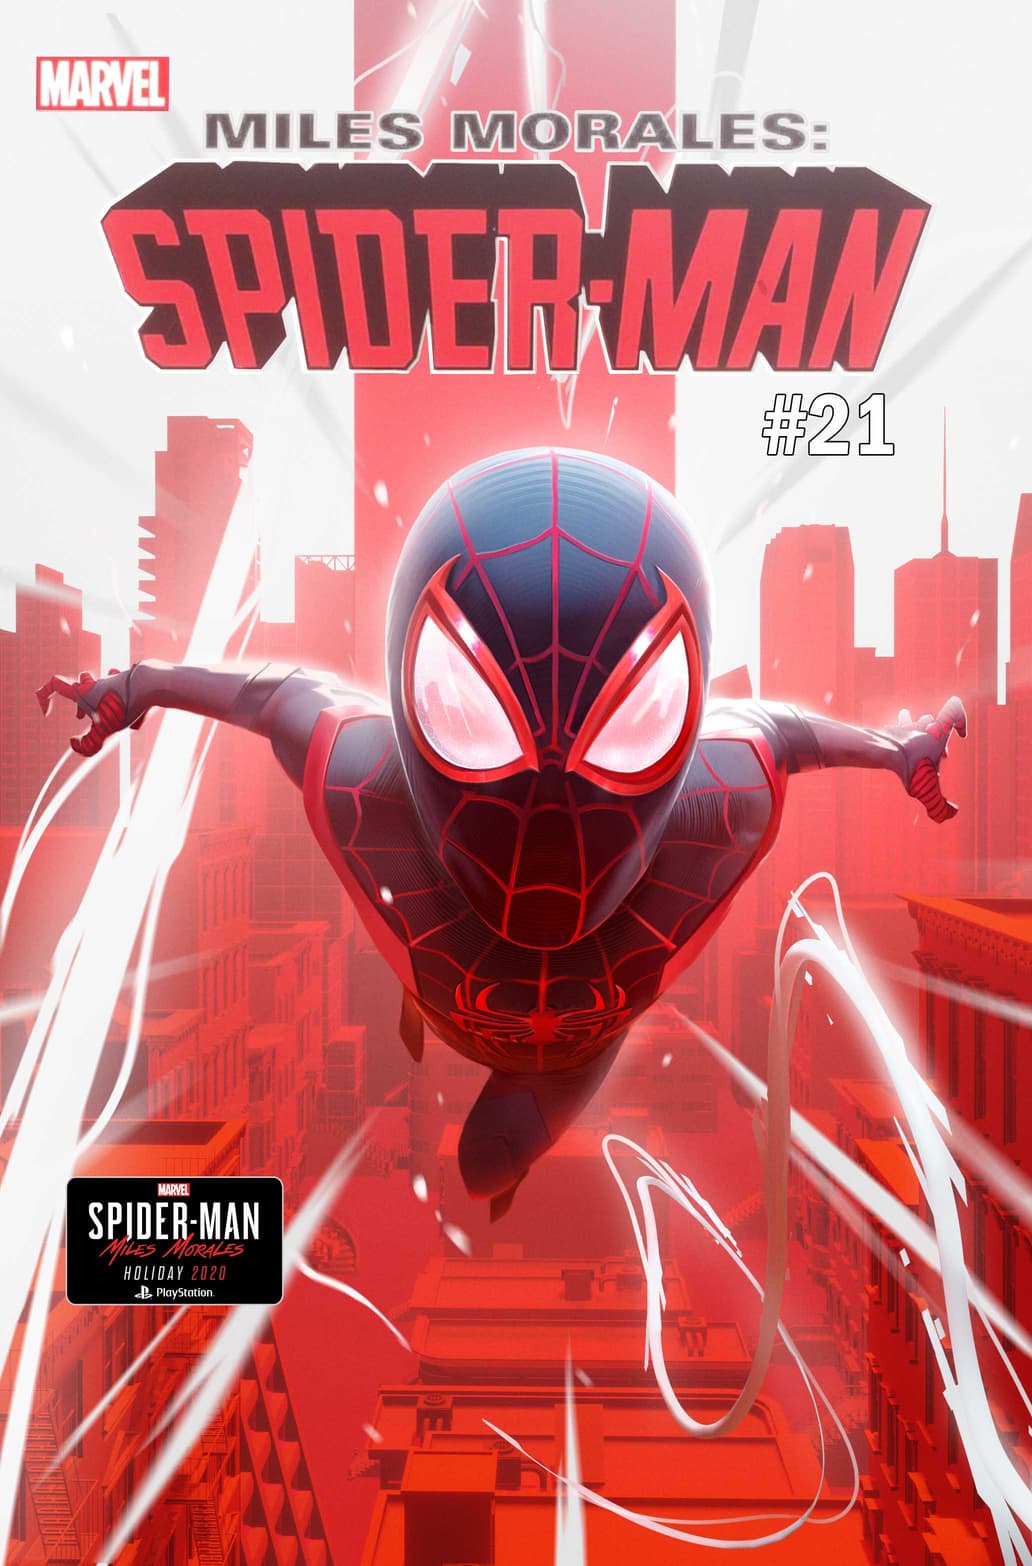 MILES MORALES: SPIDER-MAN #21 cover by Insomniac Games senior concept artist Nicholas Schumaker